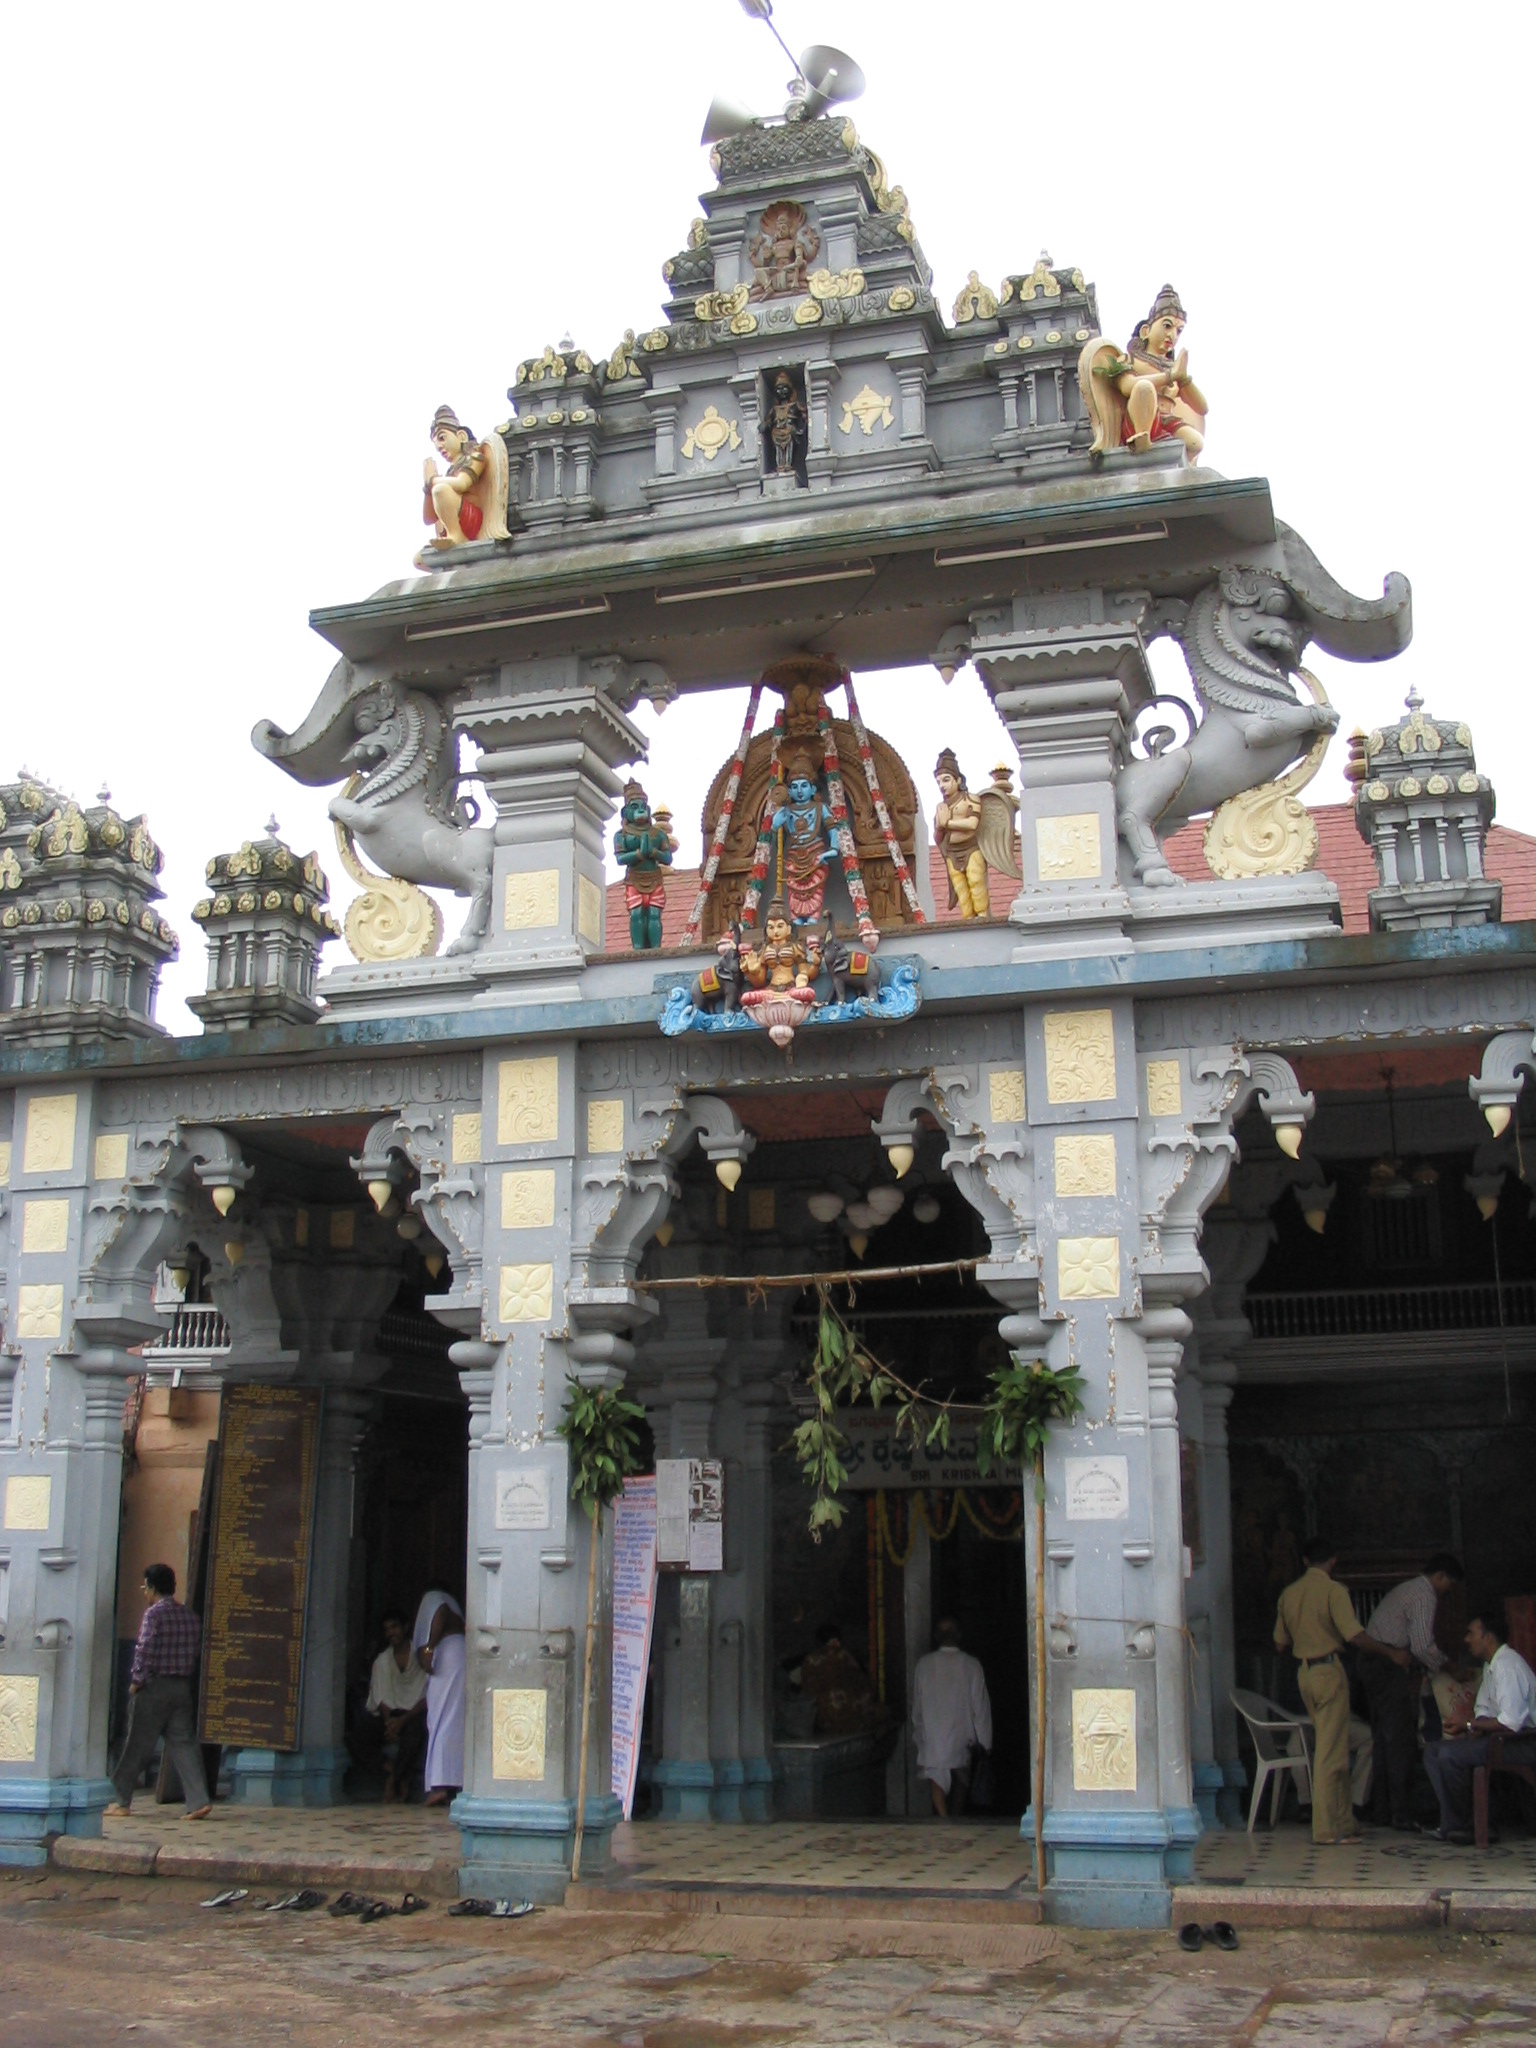 Udupi Sri Krishna temple in Karnataka